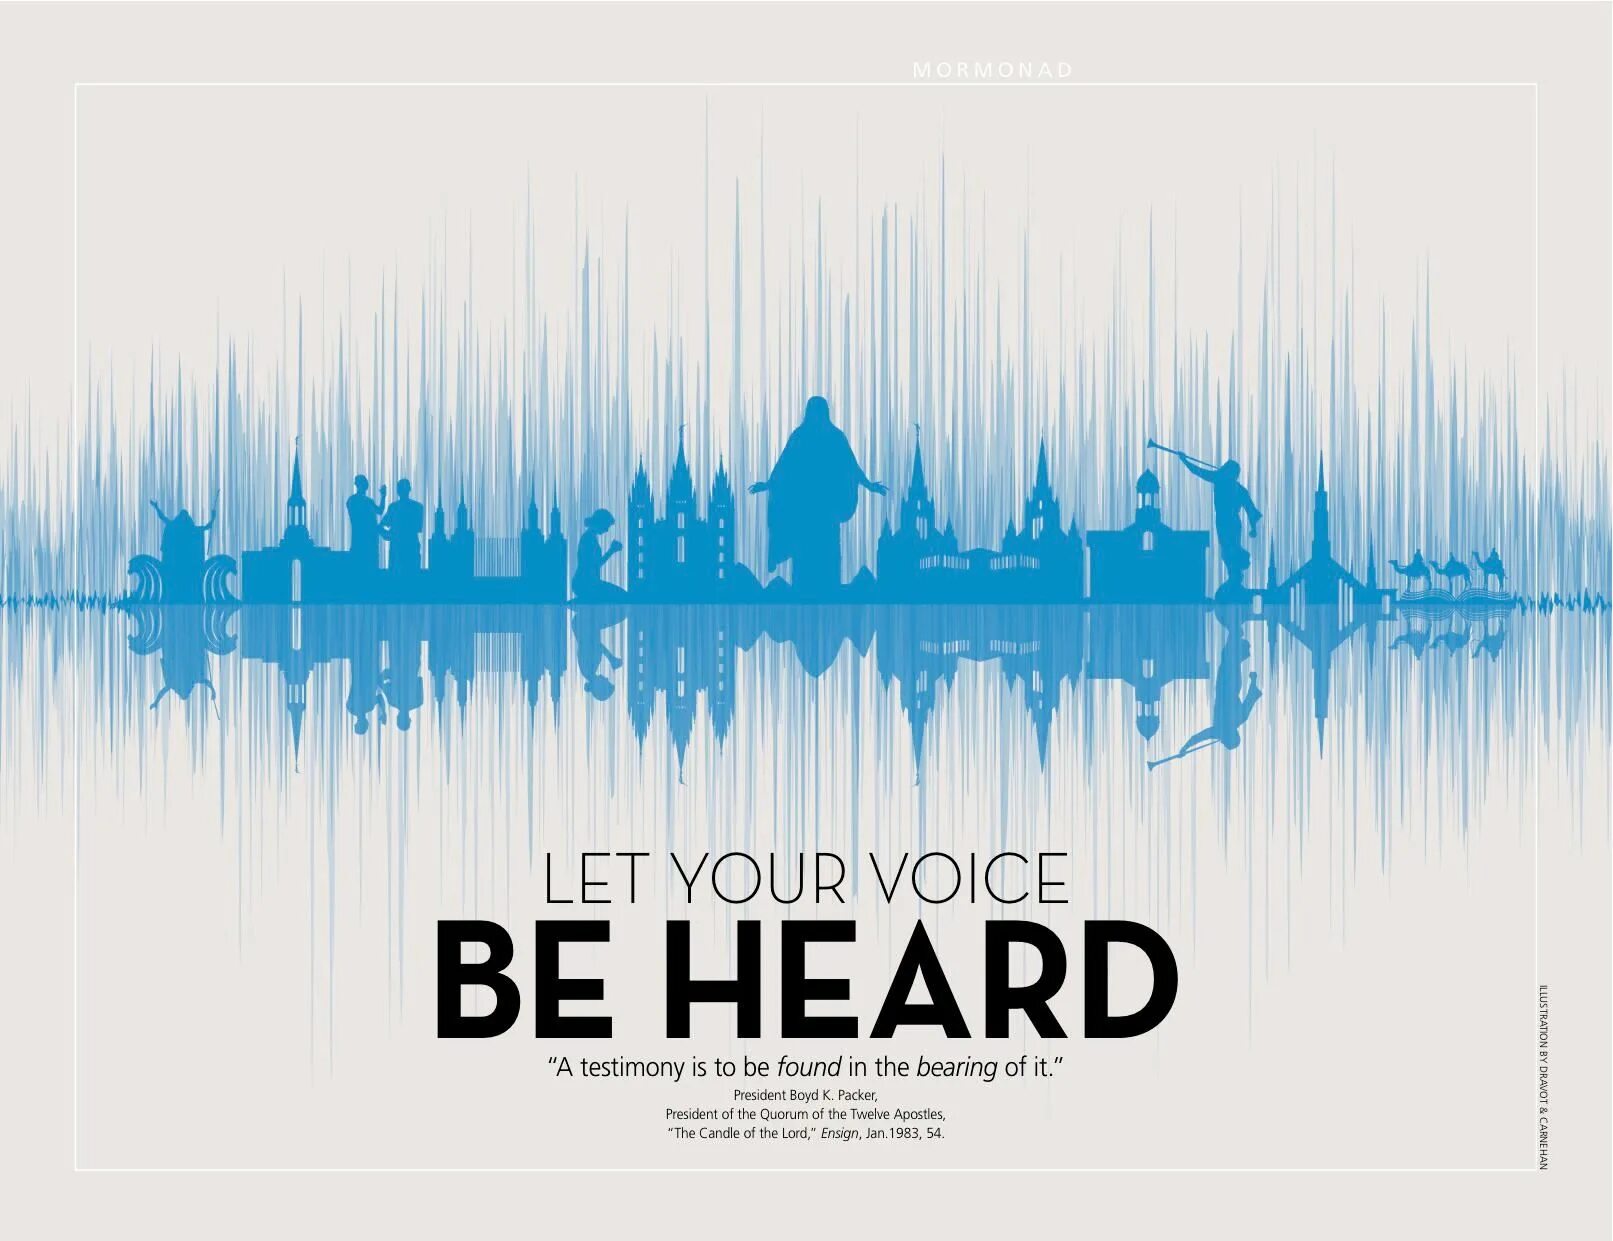 Voice should be. Your Voice. Be heard. Your Voice картинки. Your__Voice приват.